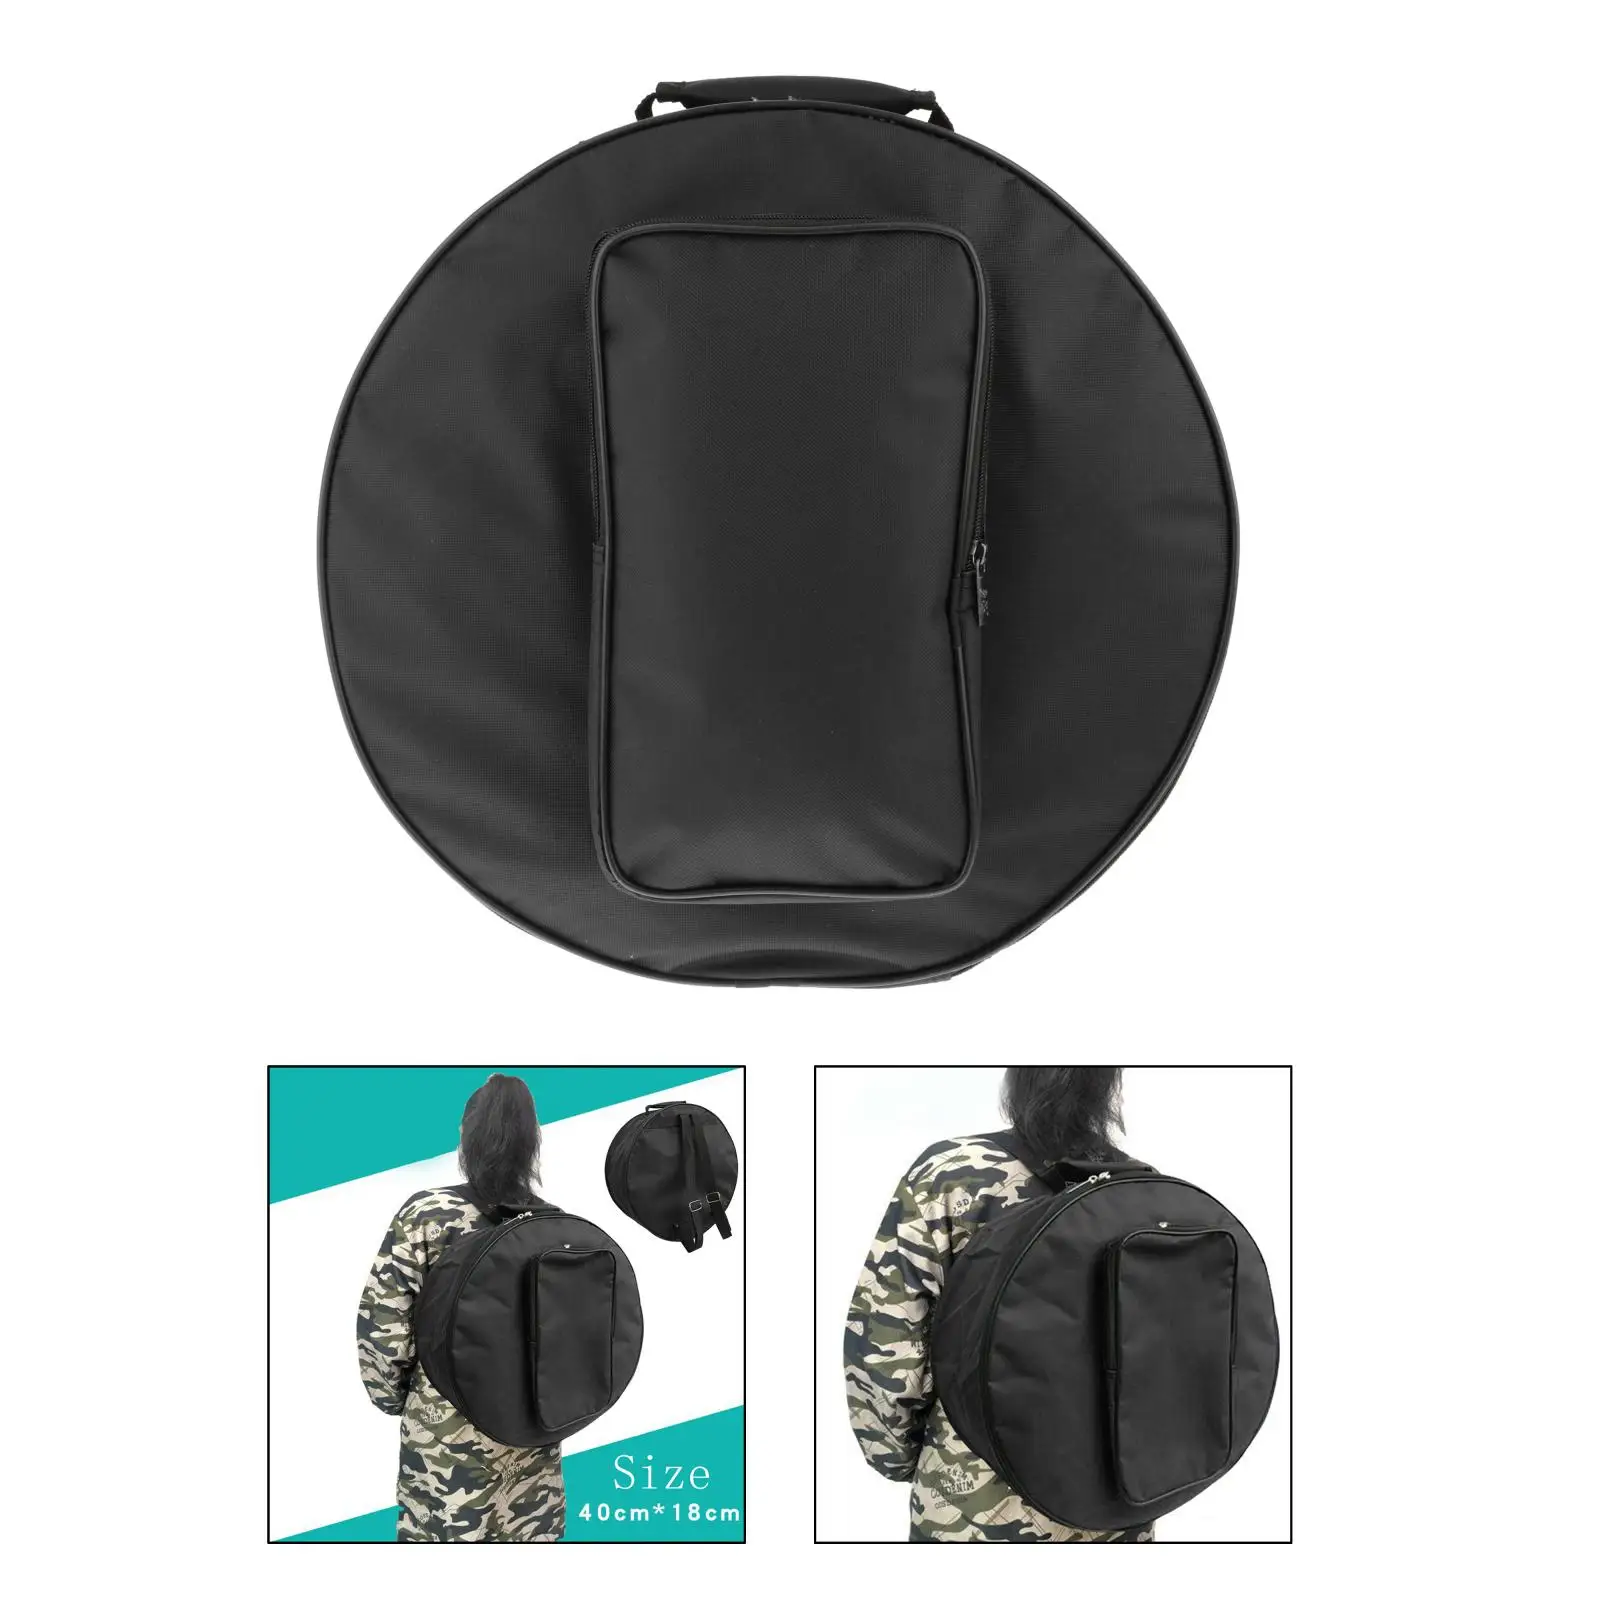 Black Bass Drum Bag Backpack Case with Shoulder Strap Outside Pockets Instrument Parts & Accessories